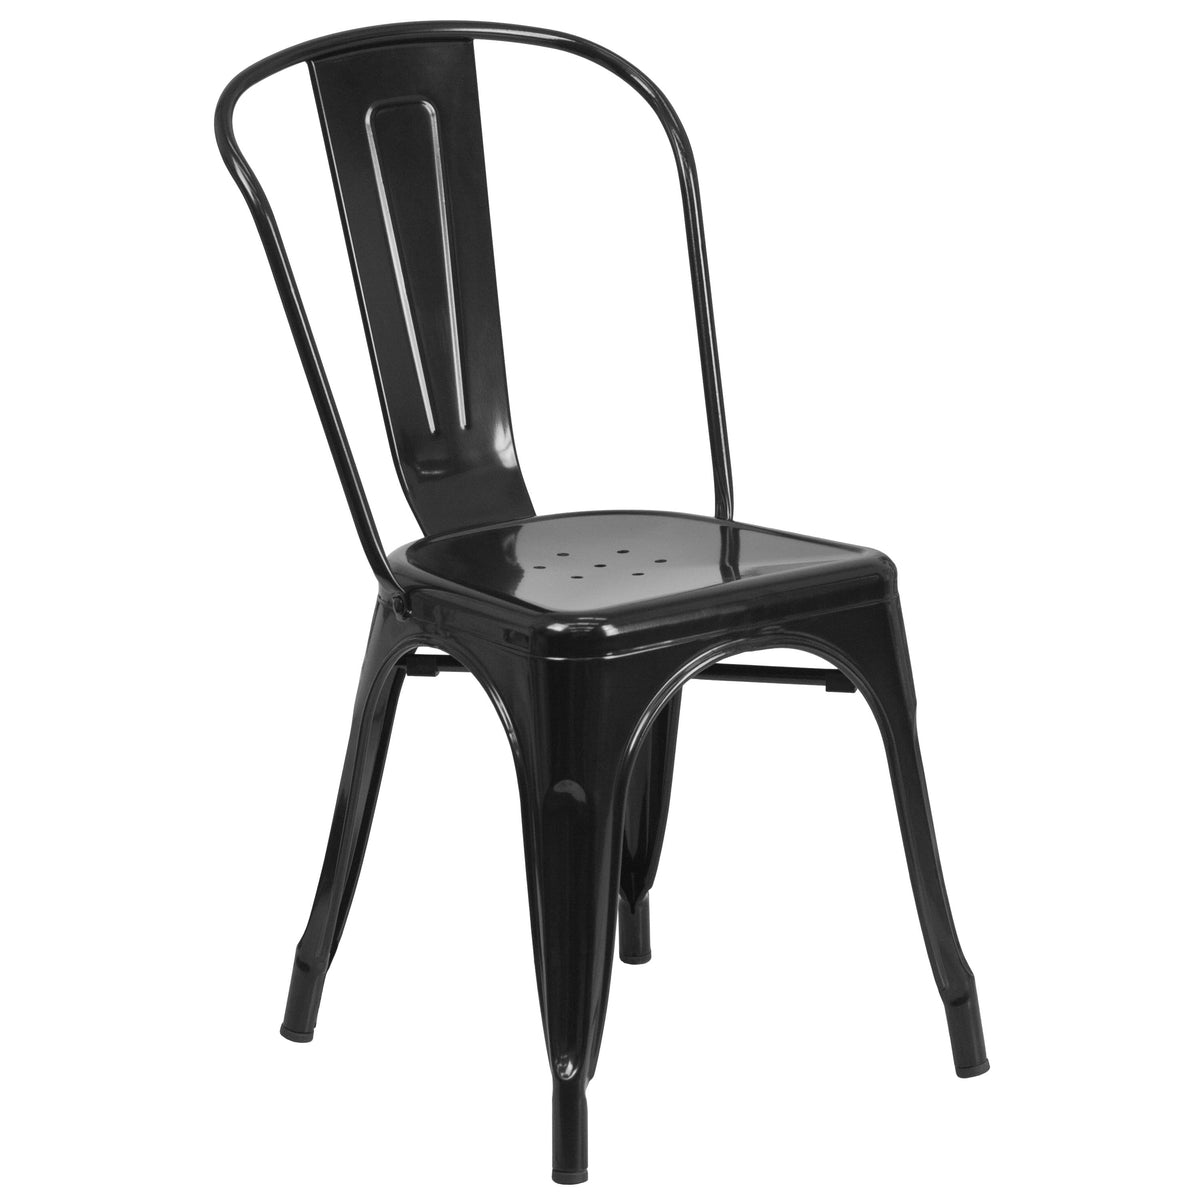 Black |#| 31.5inch x 63inch Rectangular Black Metal Indoor-Outdoor Table Set w/ 4 Stack Chairs